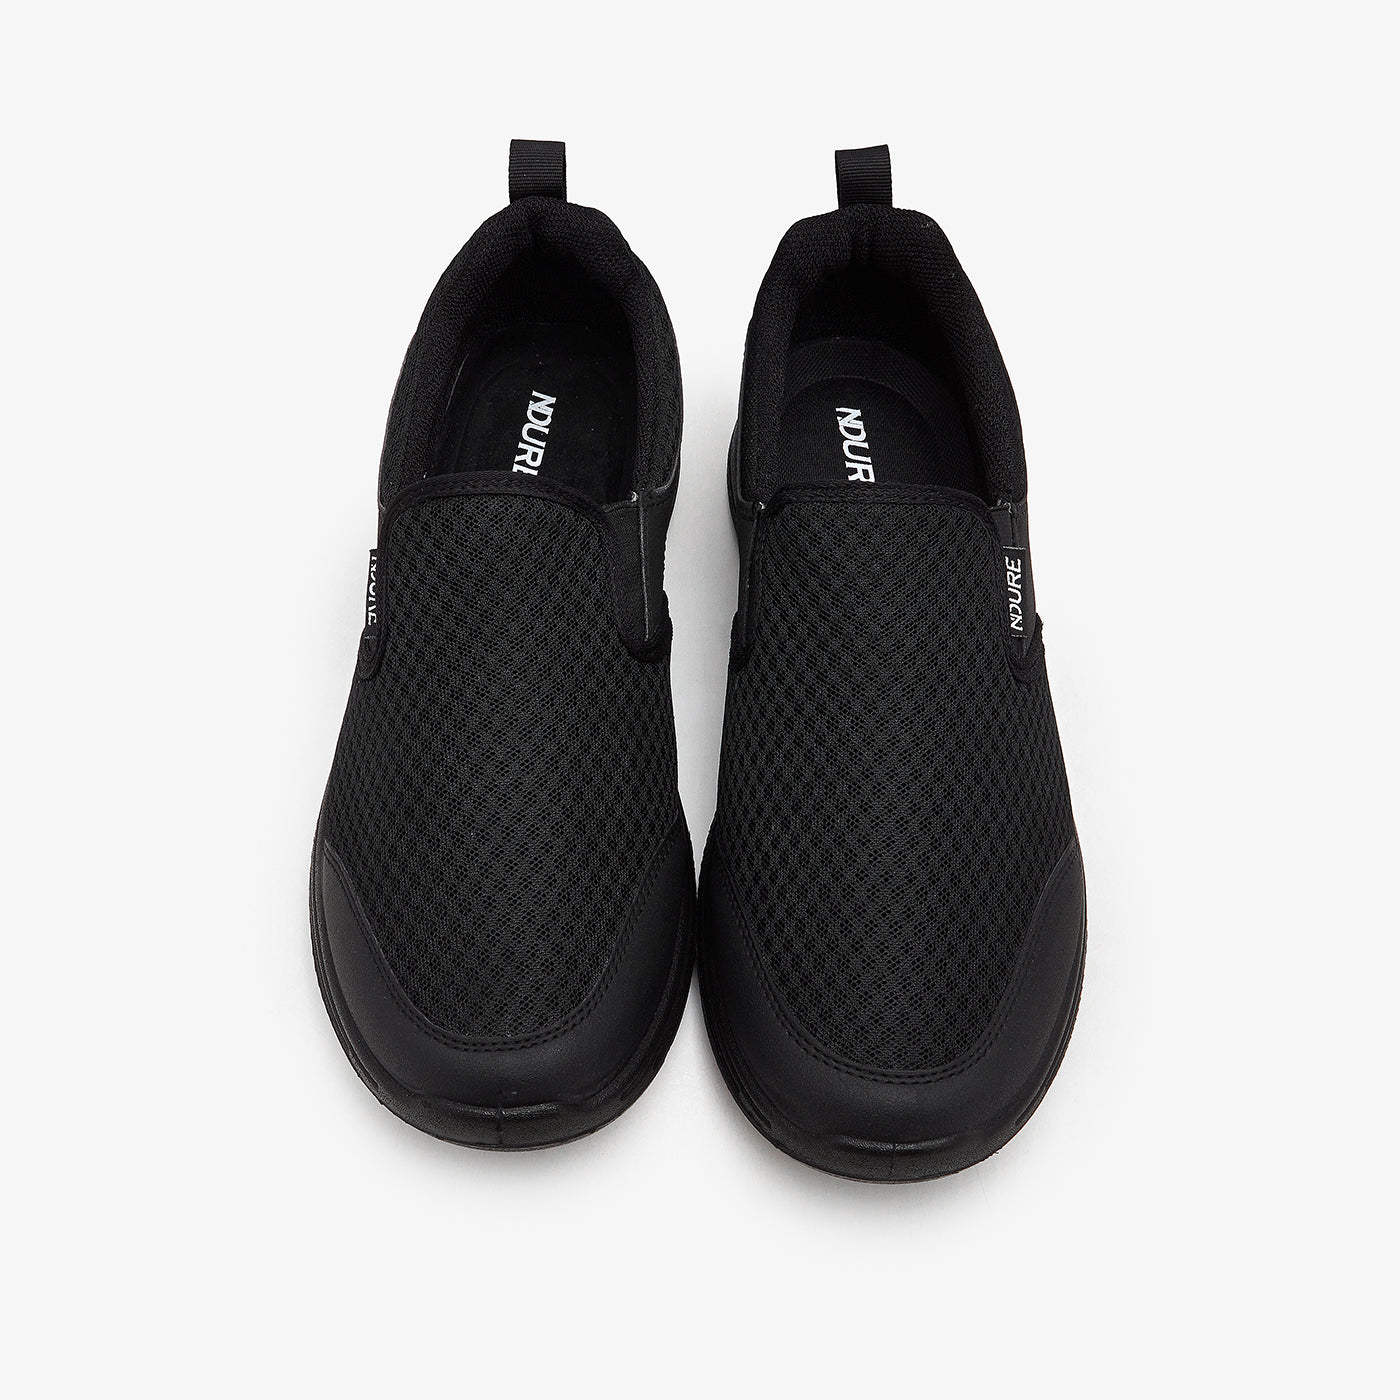 Slip-On Sports Shoes for Men